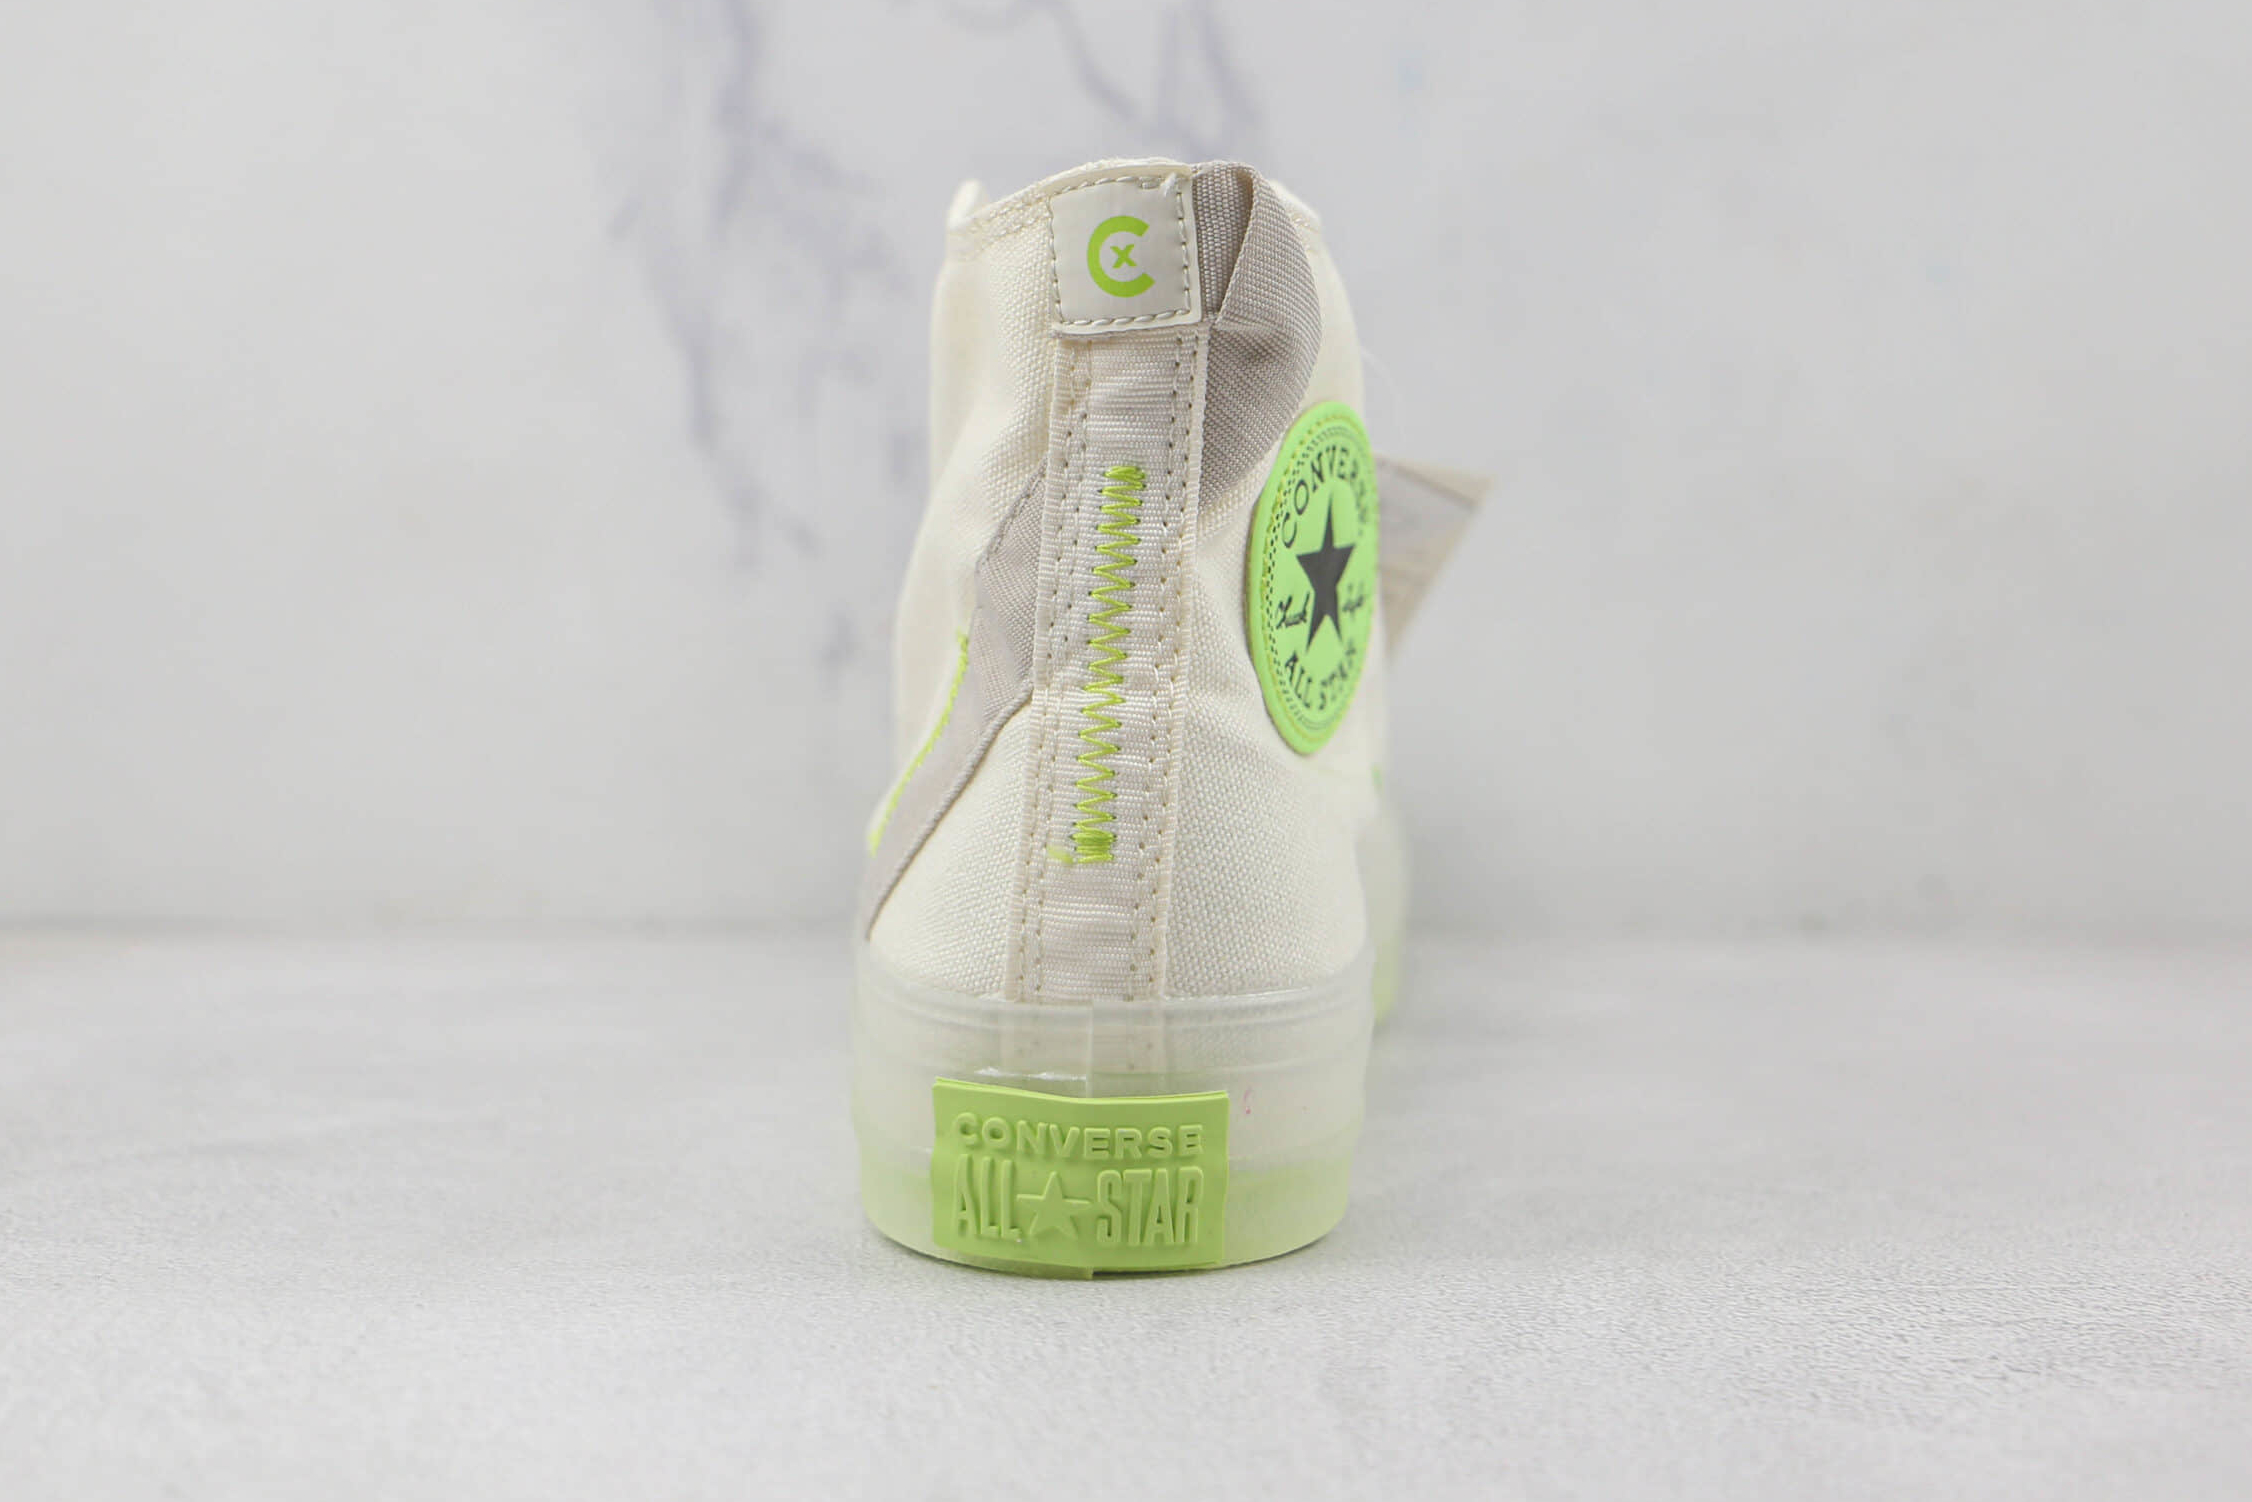 Converse Chuck Taylor All Star CX High 'Beige Green' A00416C - Shop Now!